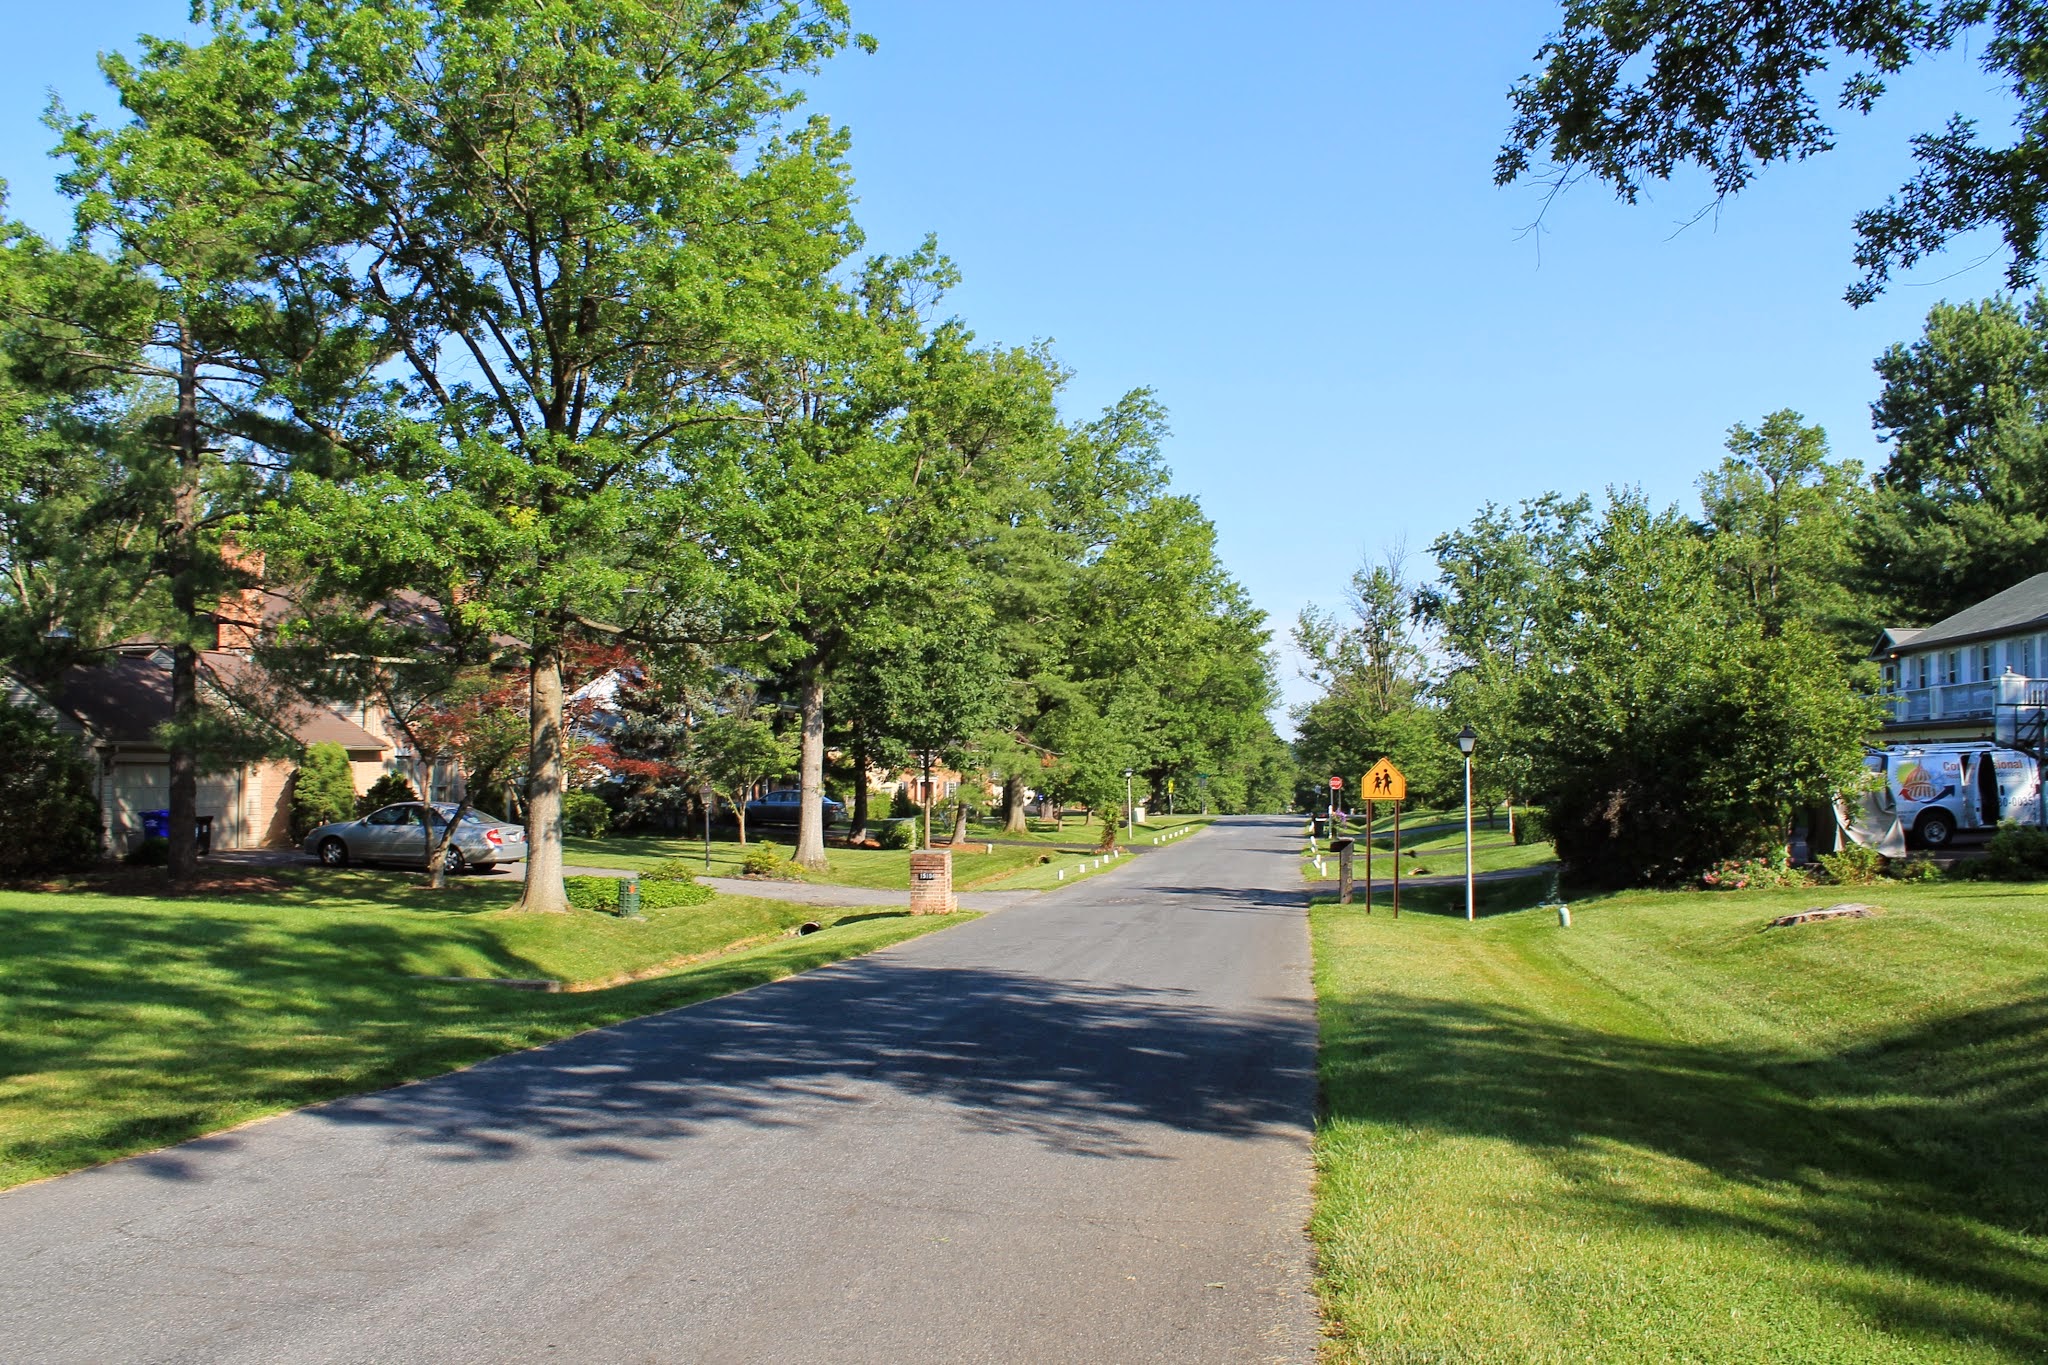 Tree lined street in the Flower Valley neighborhood